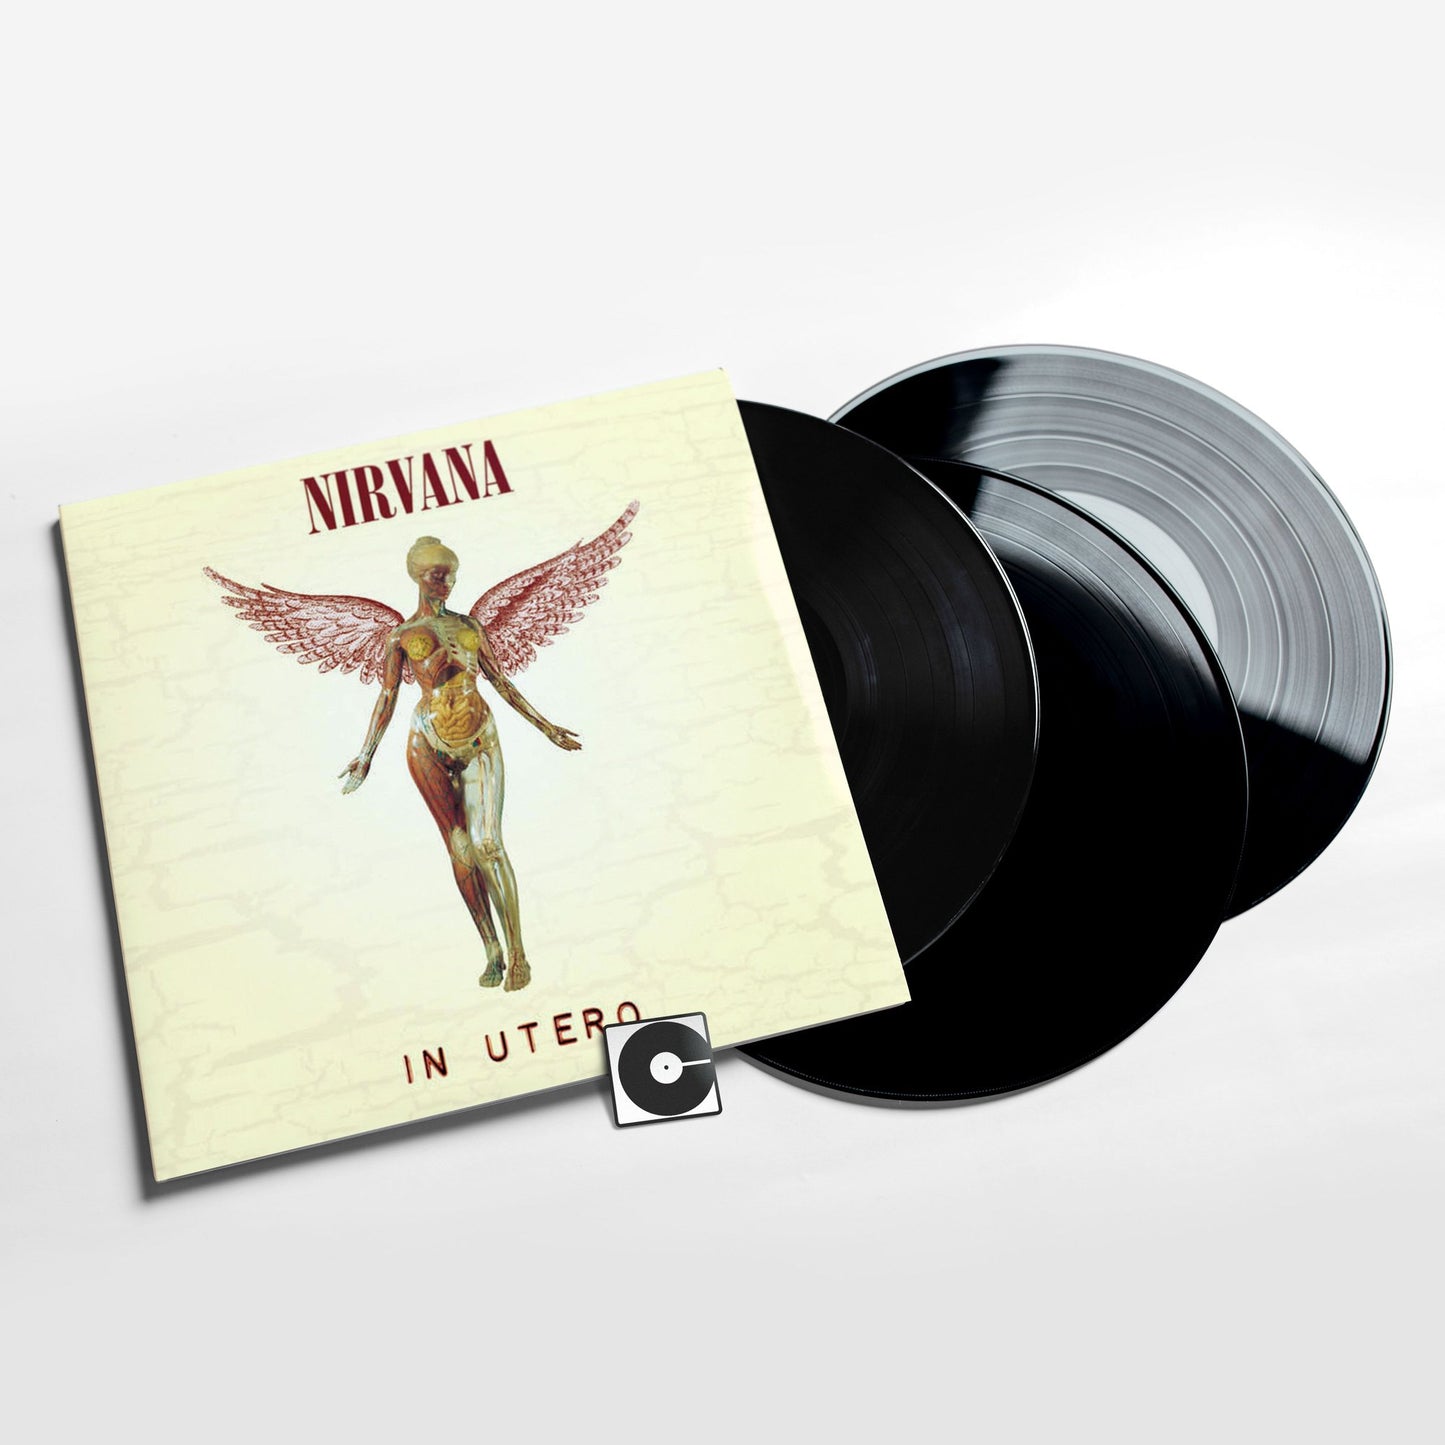 Nirvana - "In Utero" Deluxe Edition